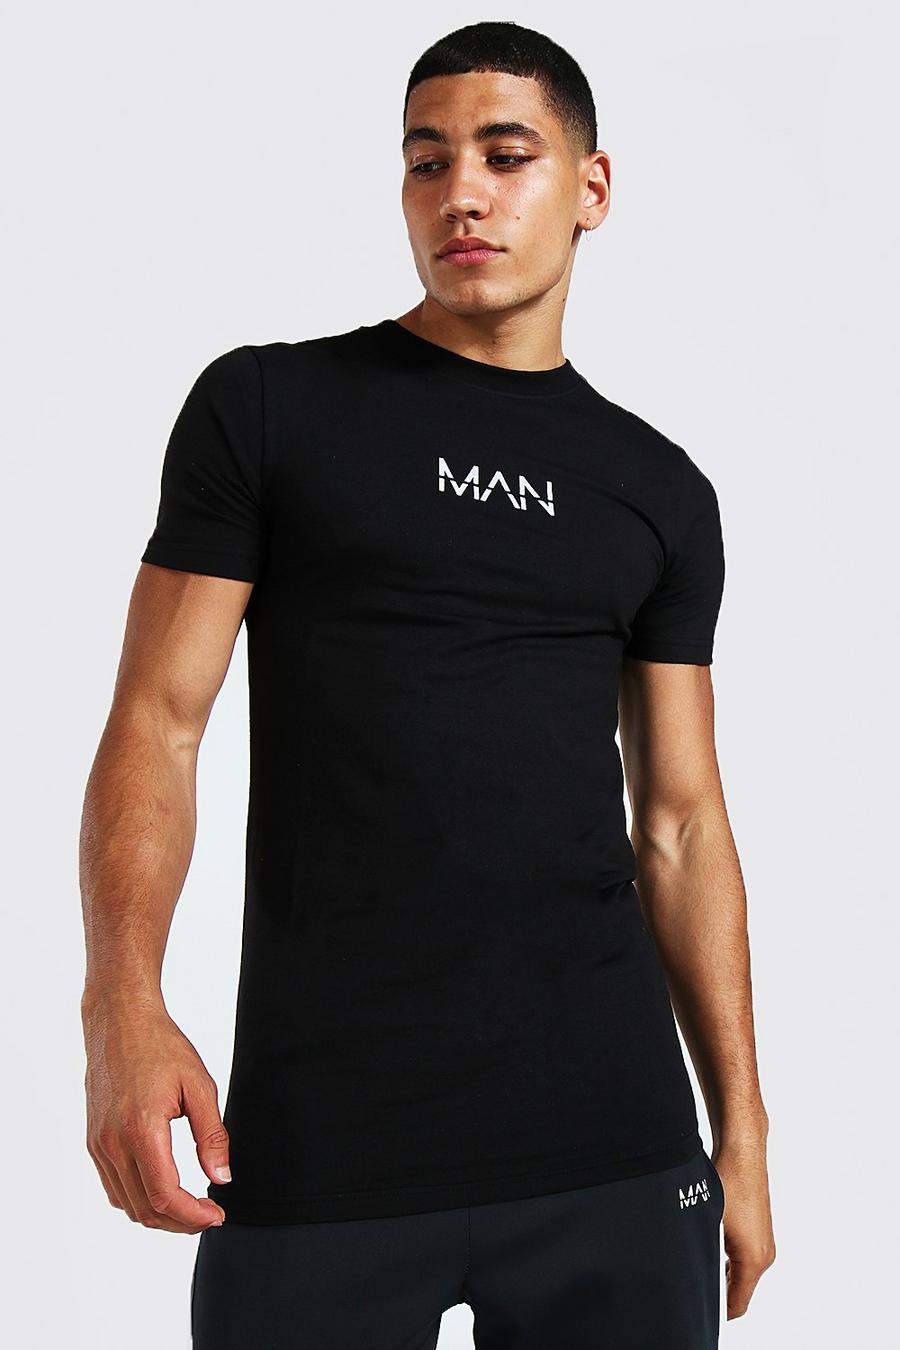 Longline Muscle Fit T-Shirt mit Original Man-Print, Schwarz image number 1